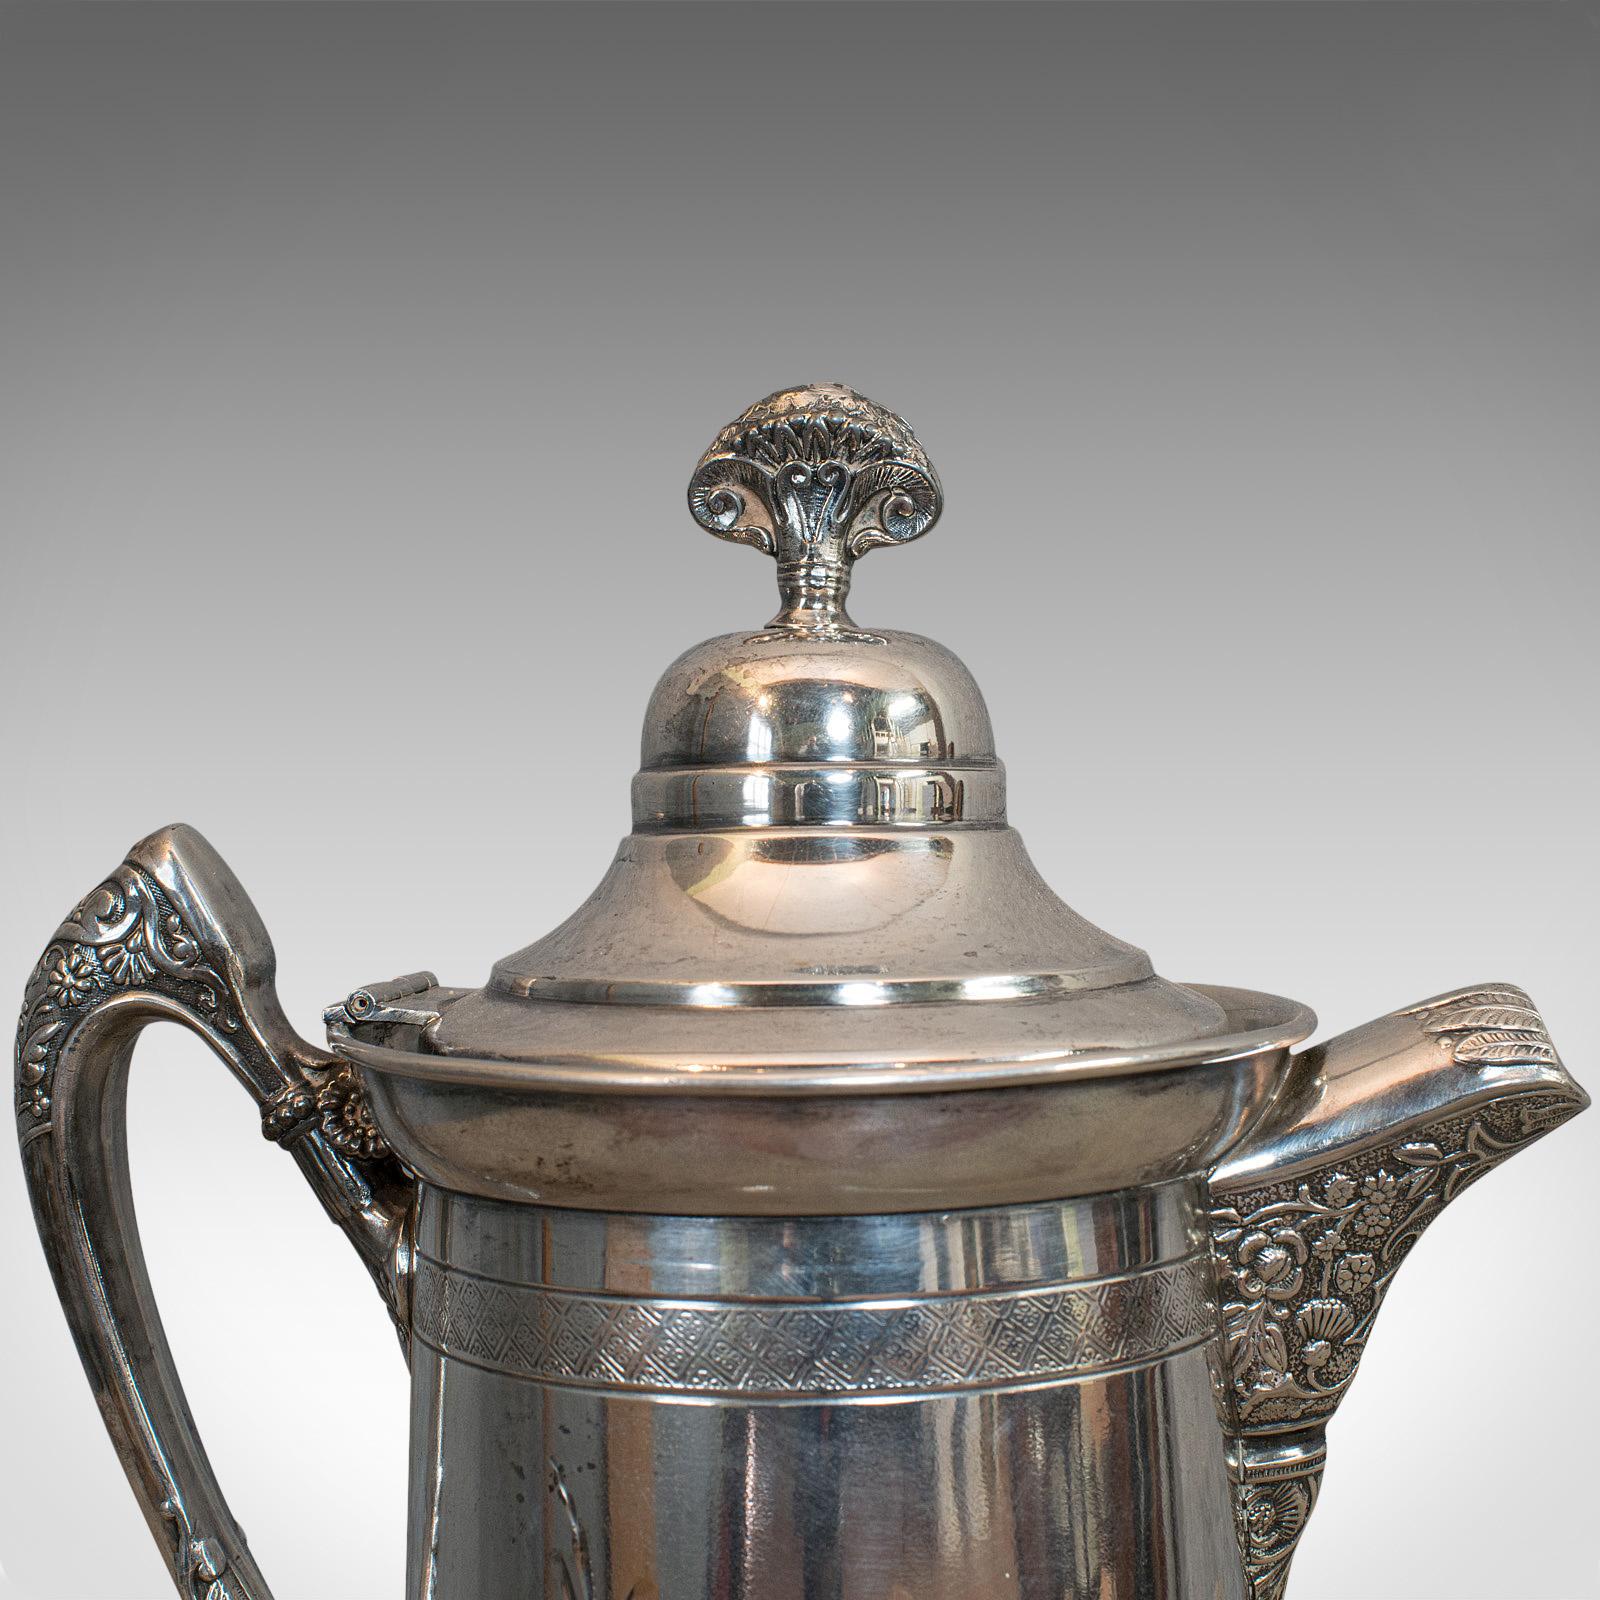 Antique Coffee Pot, English Silver Plate, Beverage Jug, 19th Century, circa 1900 3